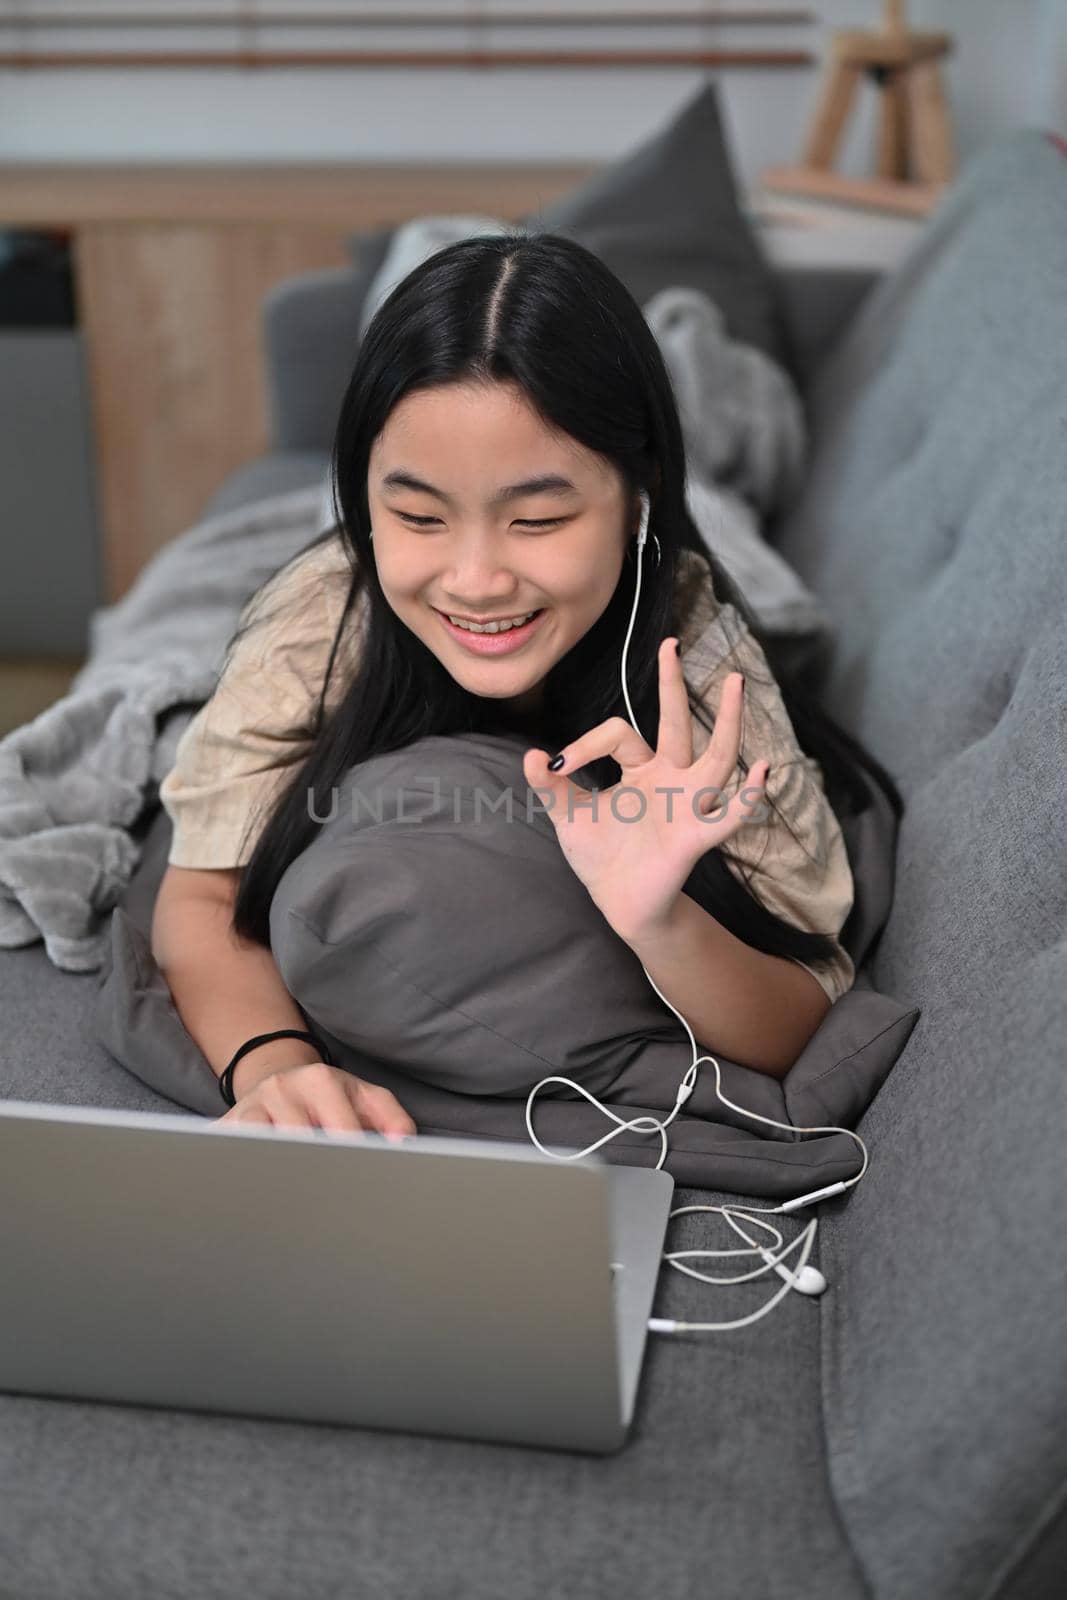 Smiling asian girl having video call on computer laptop at home. by prathanchorruangsak